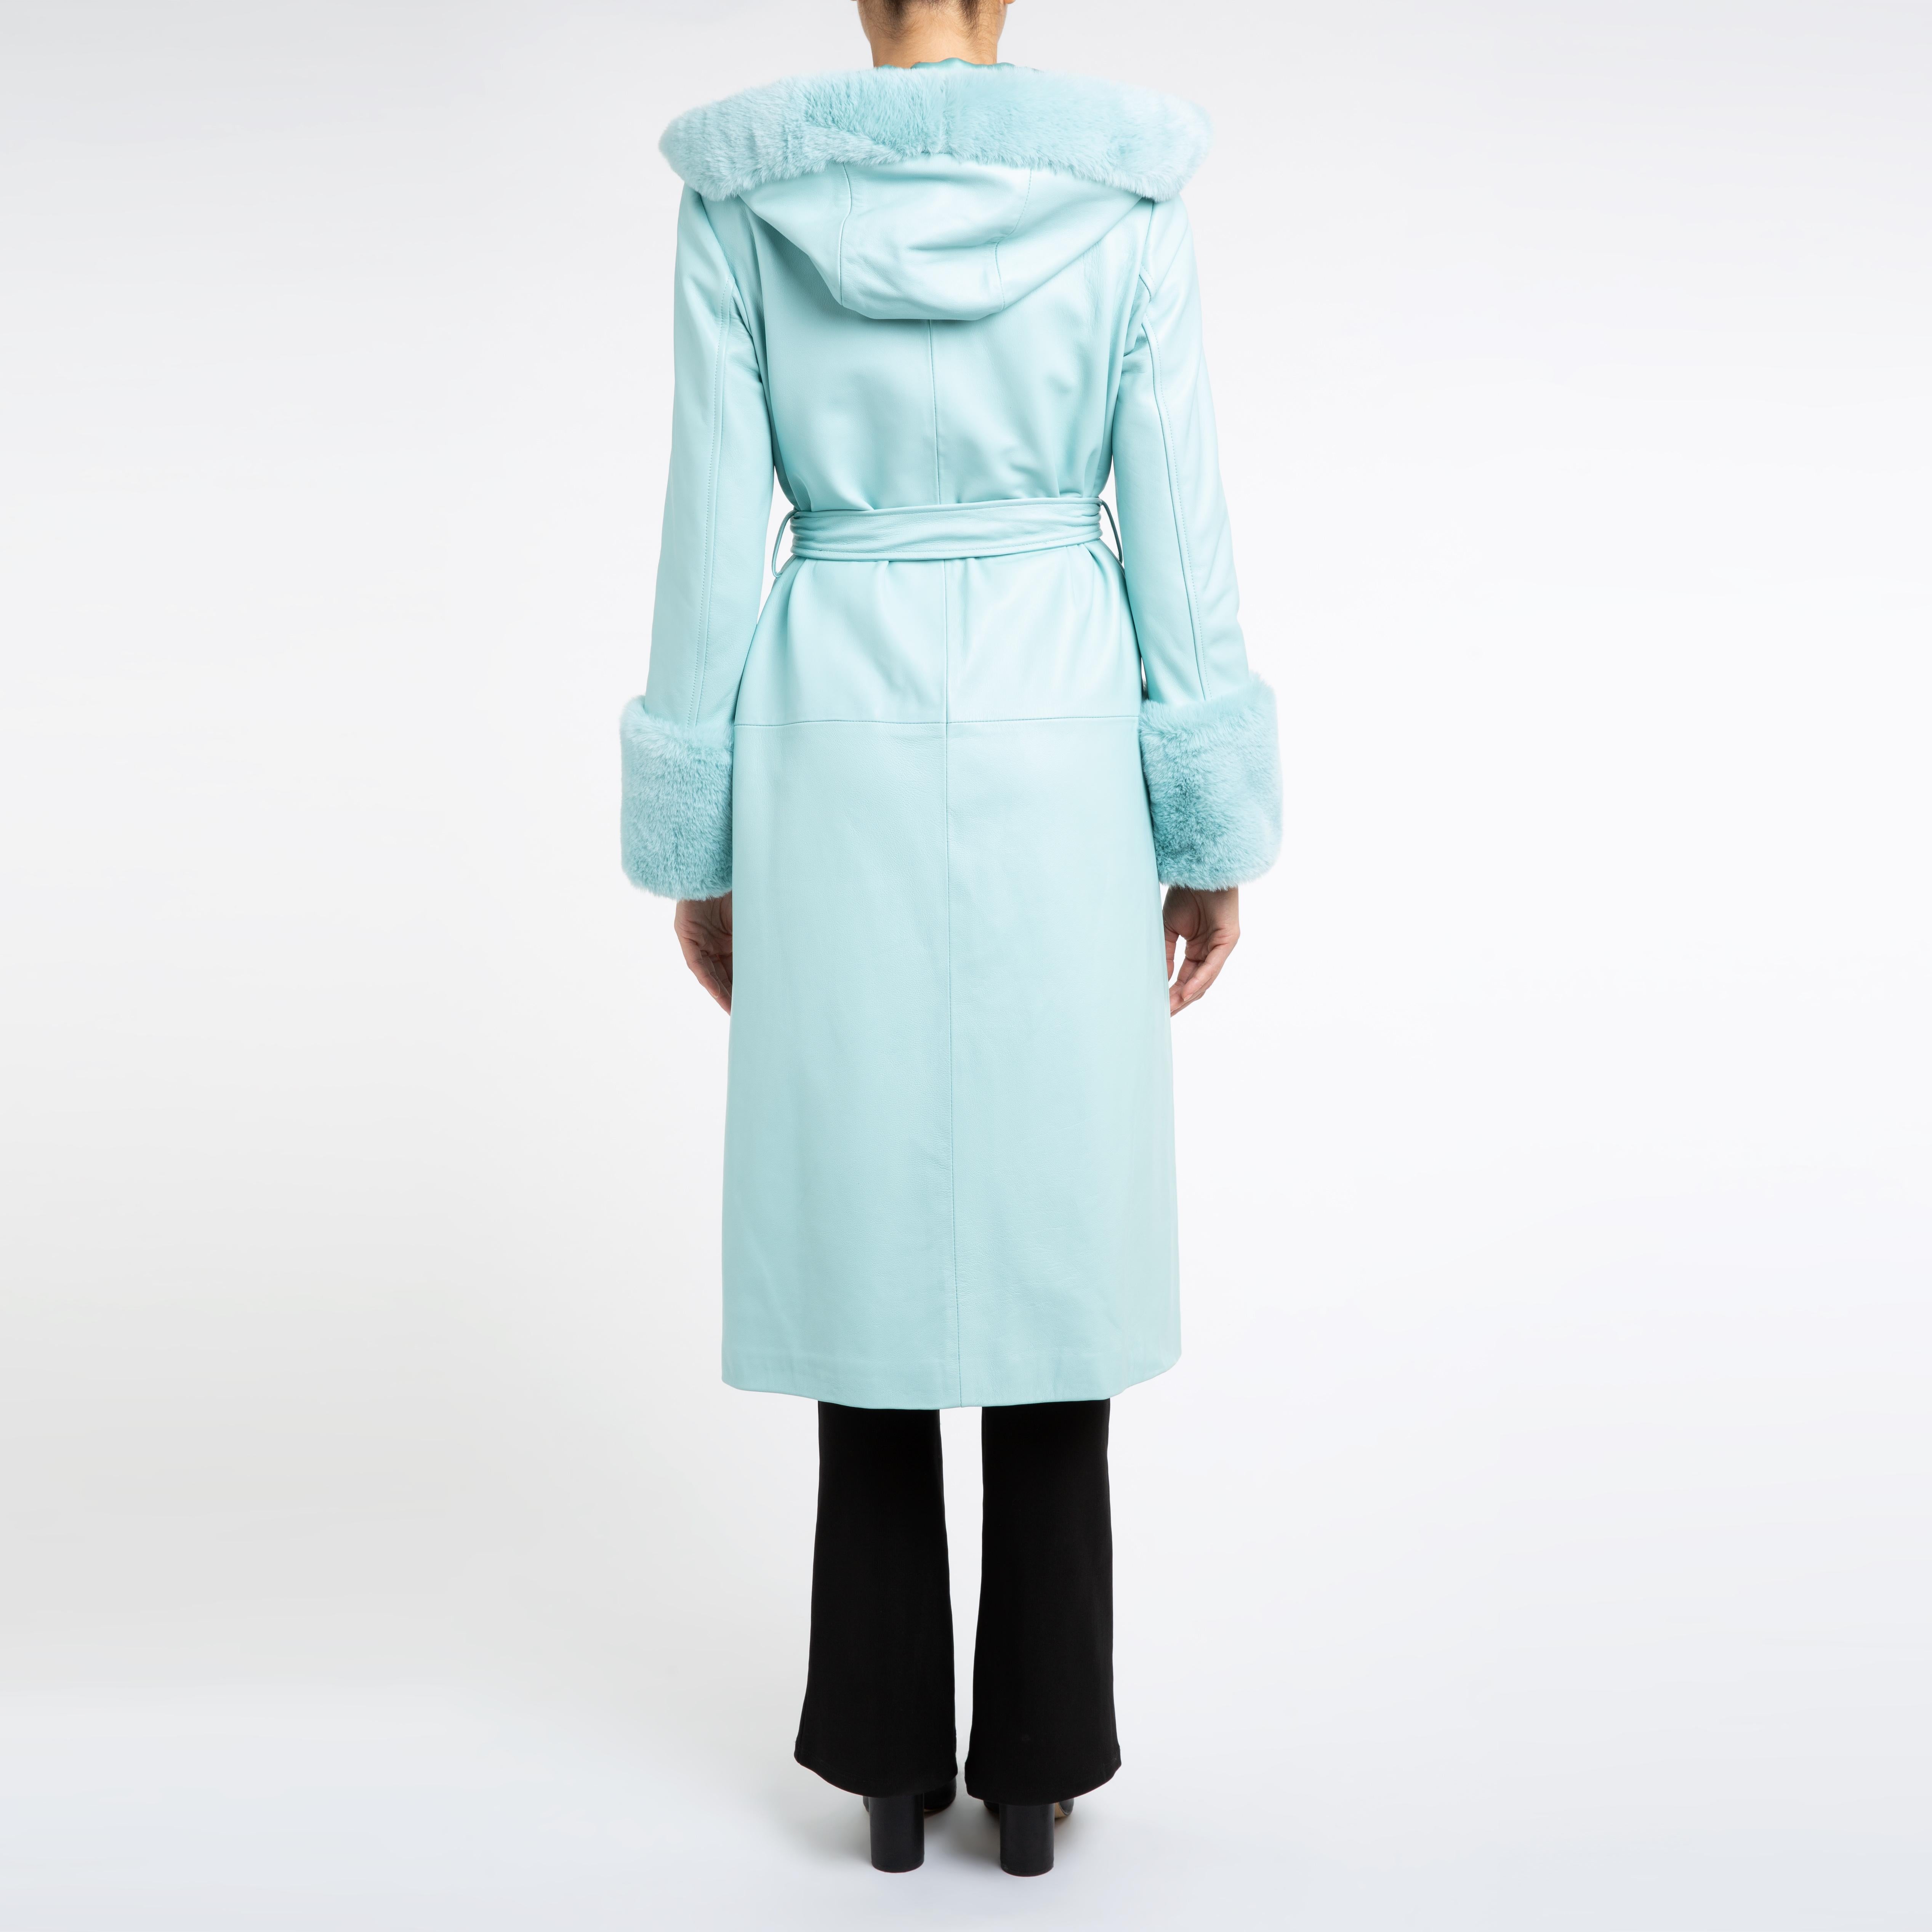 Verheyen London Hooded Leather Coat in Blue Aquamarine & Faux Fur - Size uk 12 For Sale 1